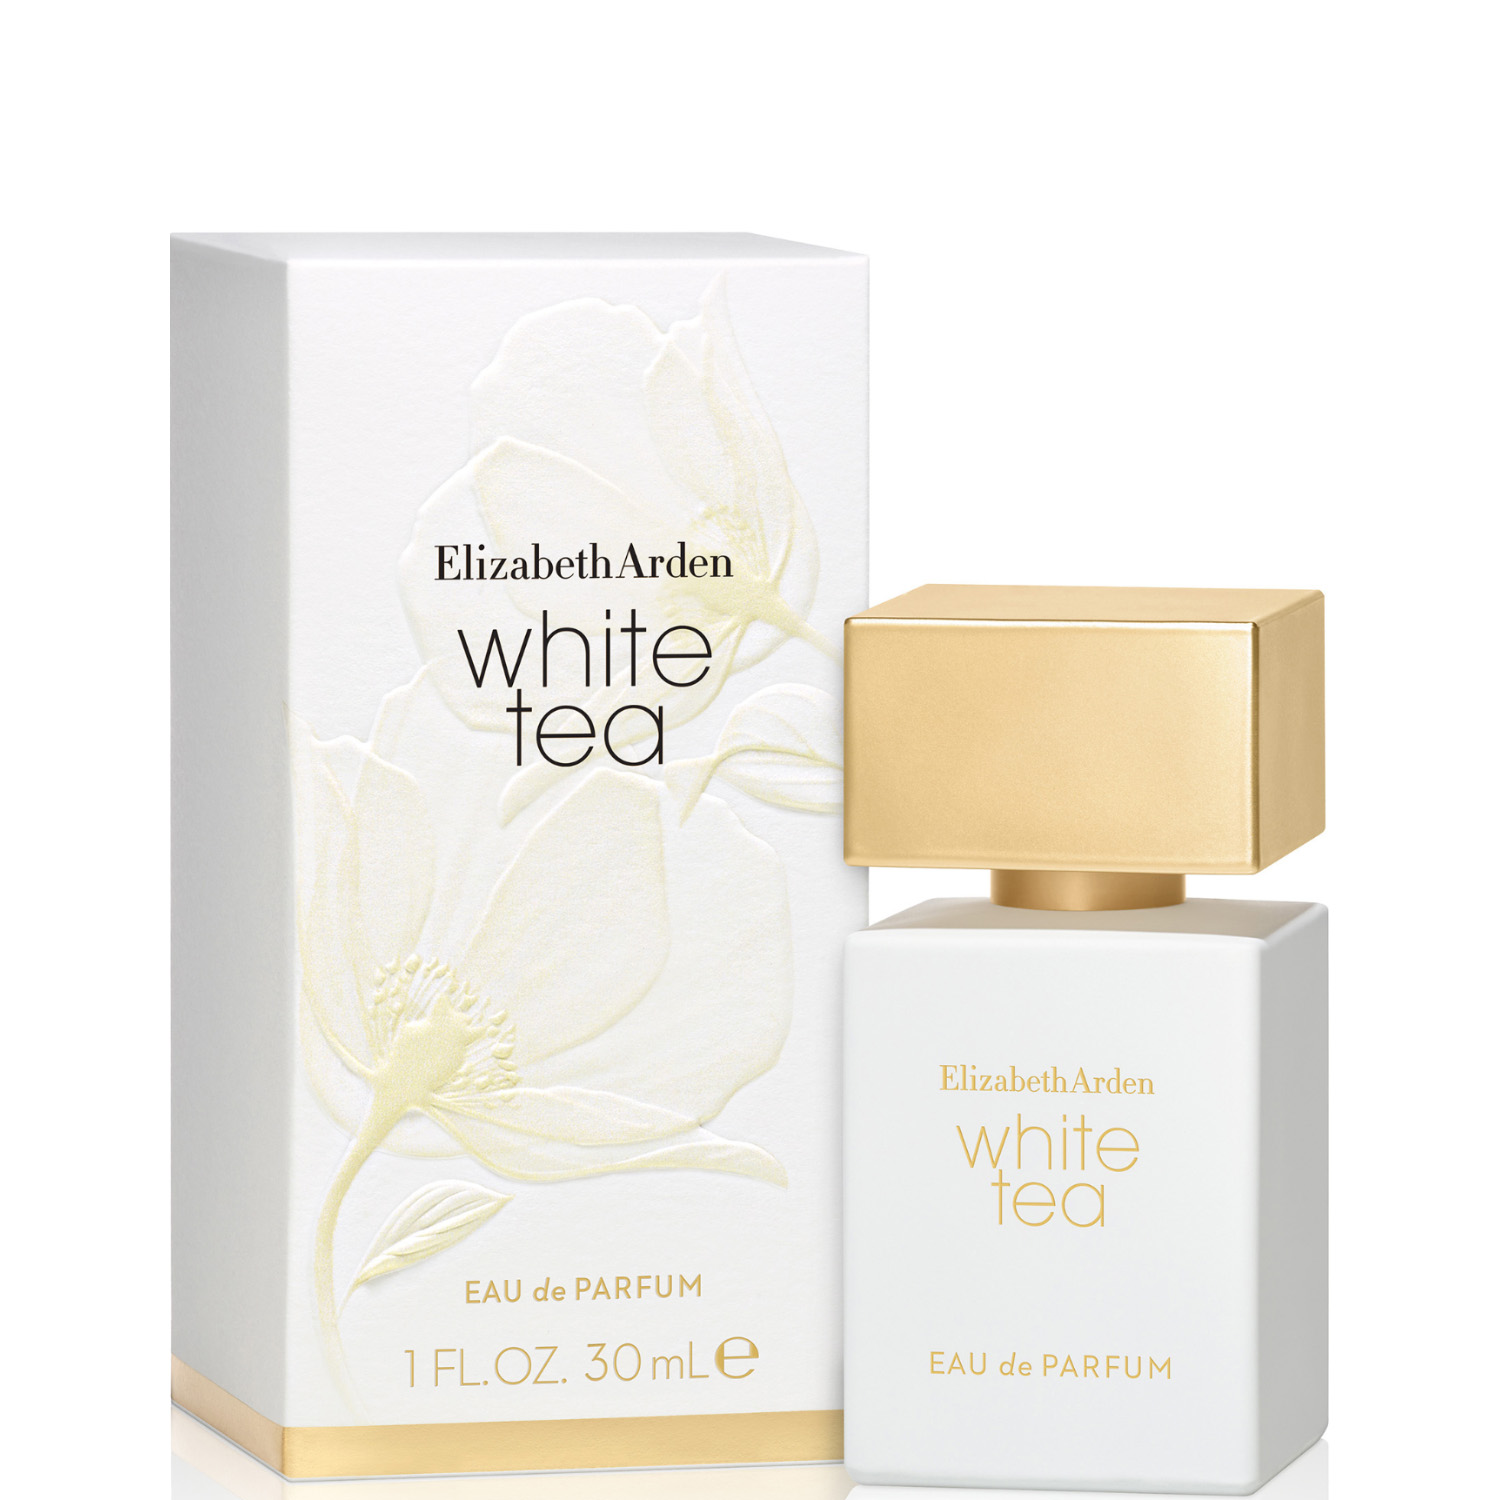 Elizabeth Arden White Tea Eau de Parfum 30ml